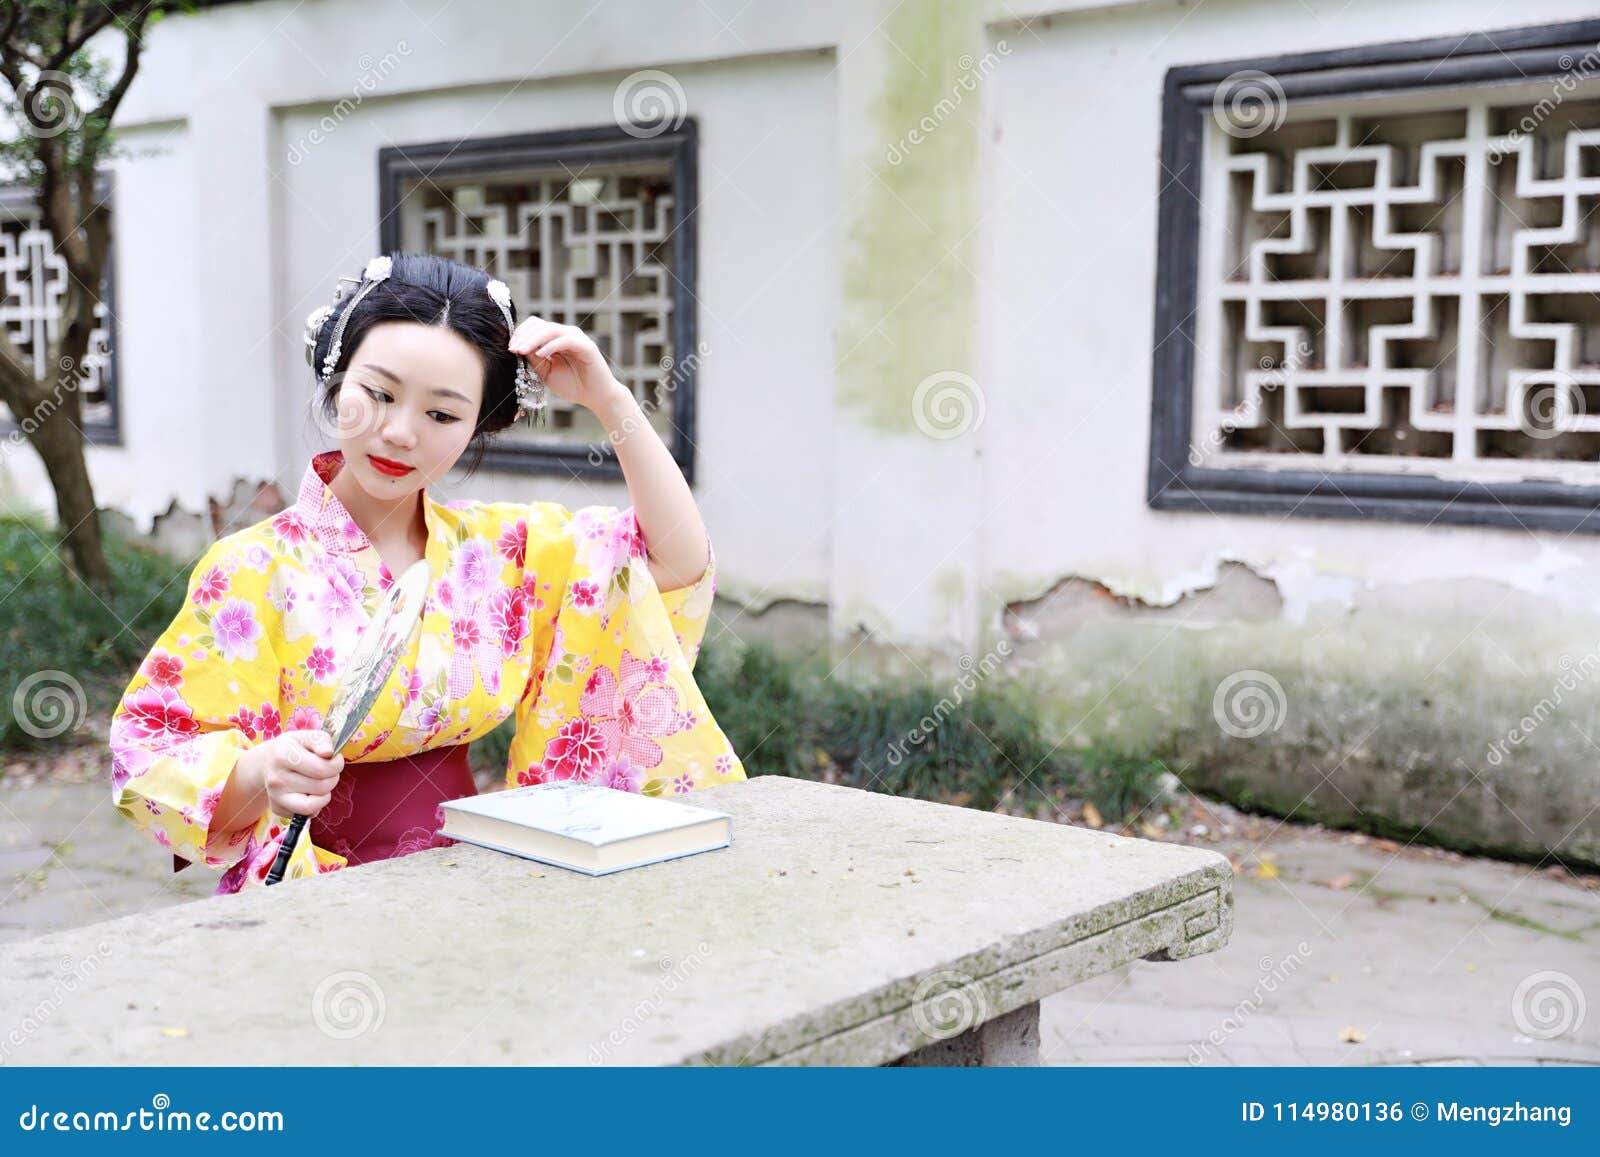 https://thumbs.dreamstime.com/z/traditional-asian-japanese-beautiful-woman-wears-kimono-fan-hand-reading-book-outdoor-spring-garden-japanese-woman-114980136.jpg